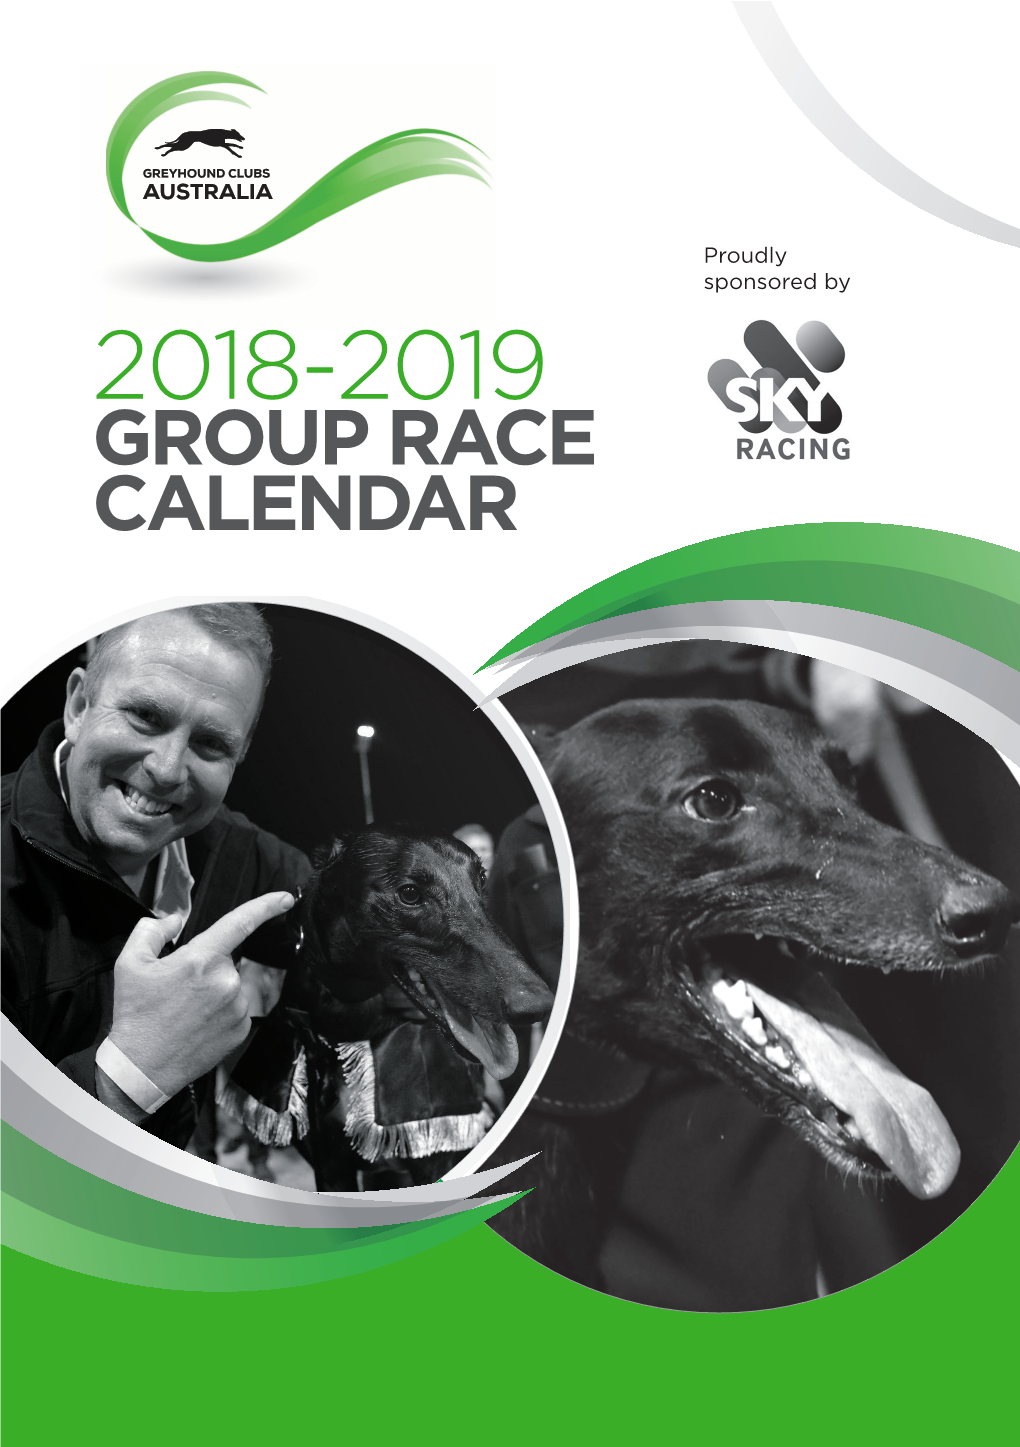 GROUP RACE CALENDAR Message from Greyhound Clubs Australia